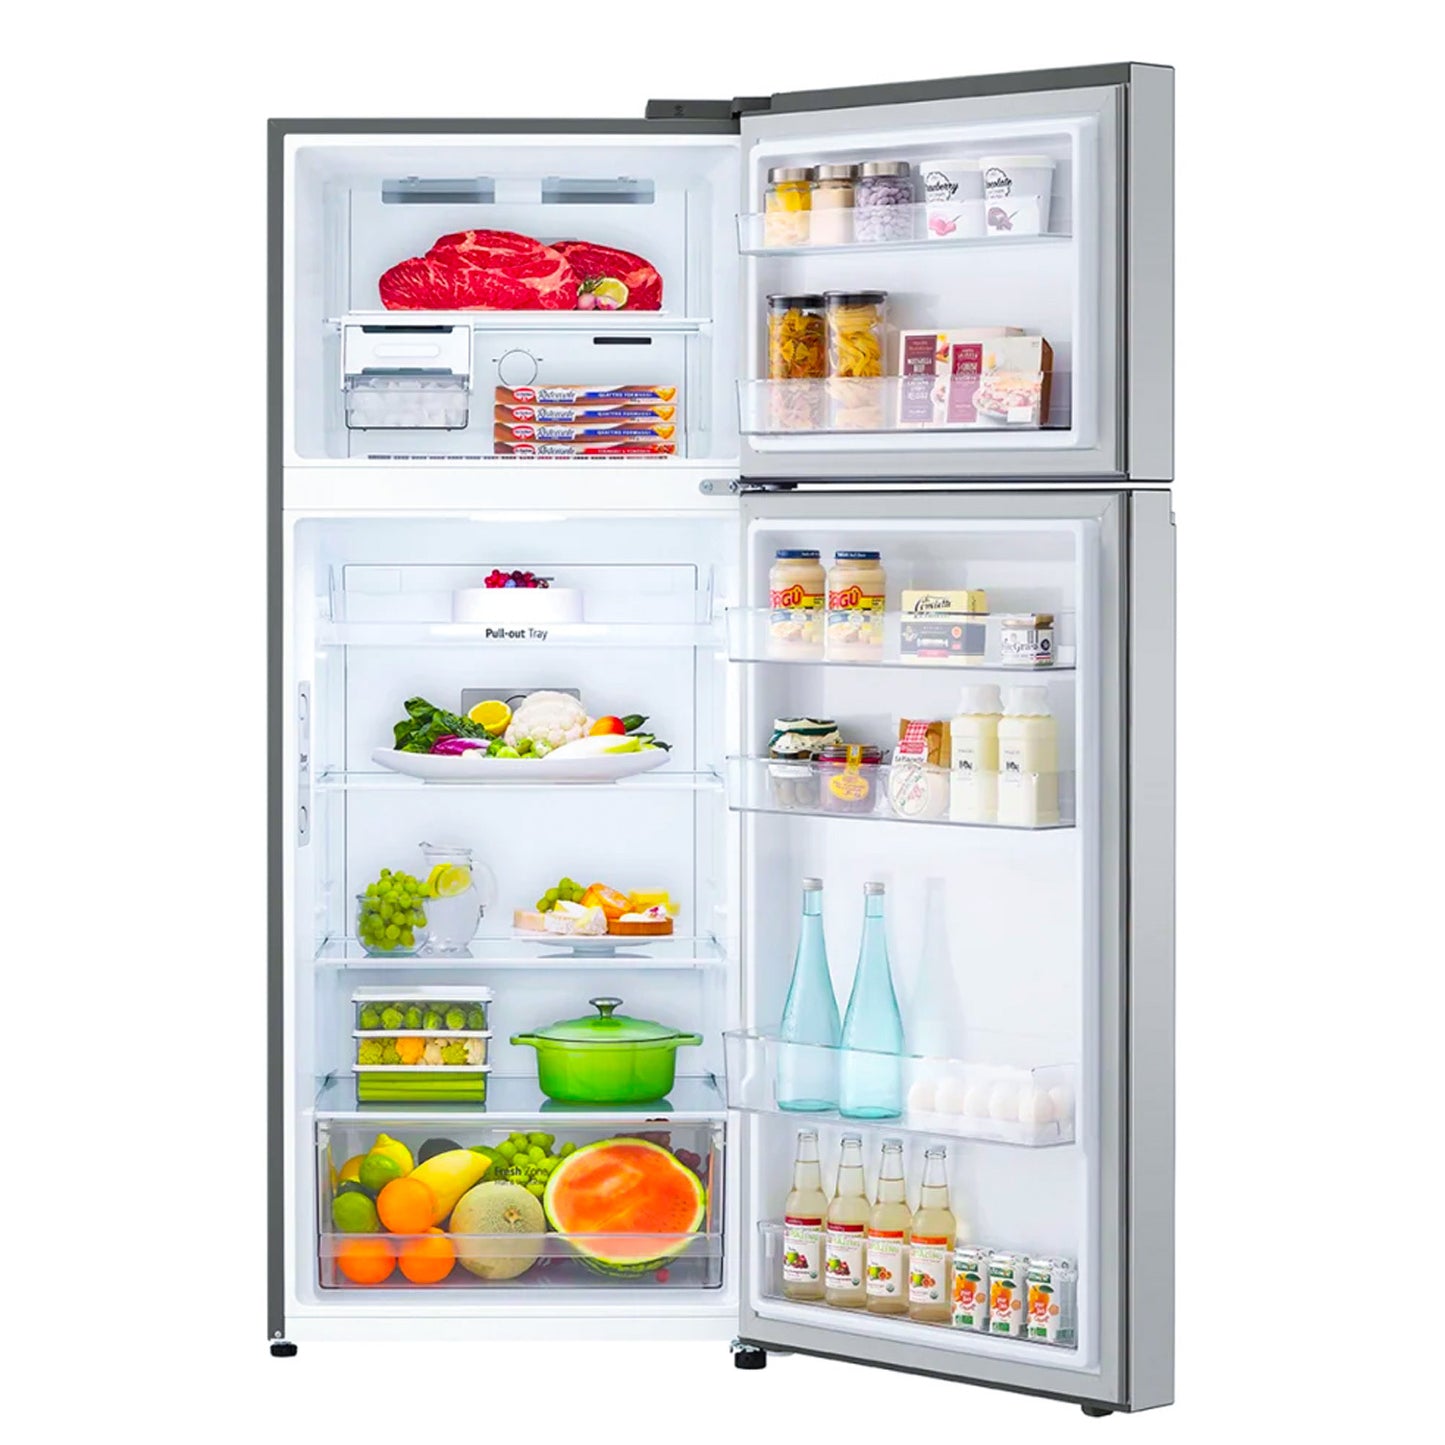 LG GN-B372PLGB 375L Top Freezer Refrigerator with Smart Inverter Compressor